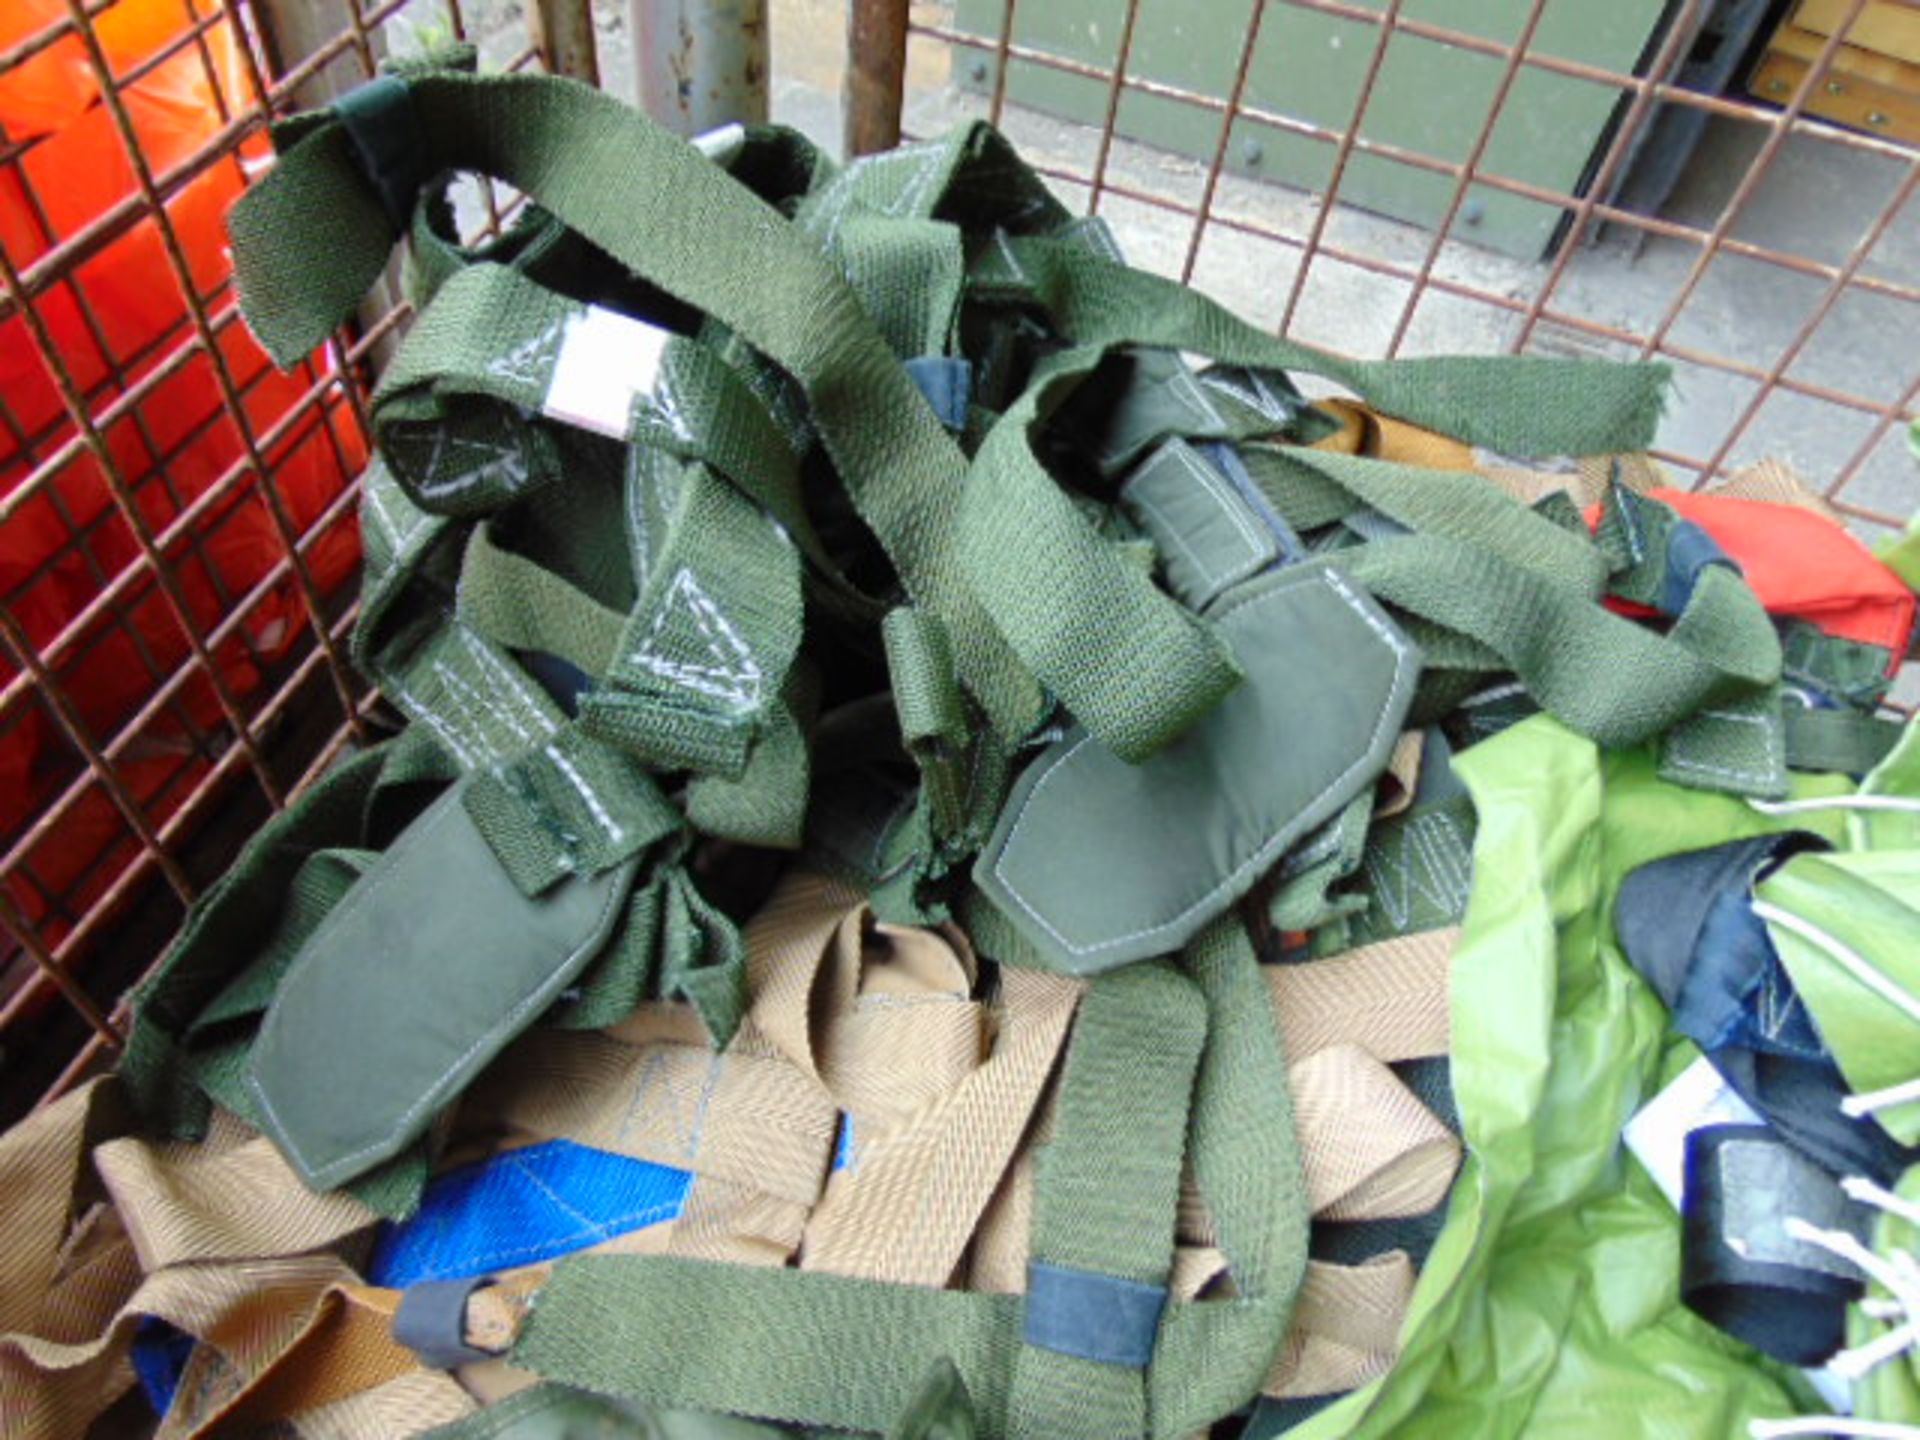 Stillage of Parachute Bags, Straps etc - Image 4 of 5